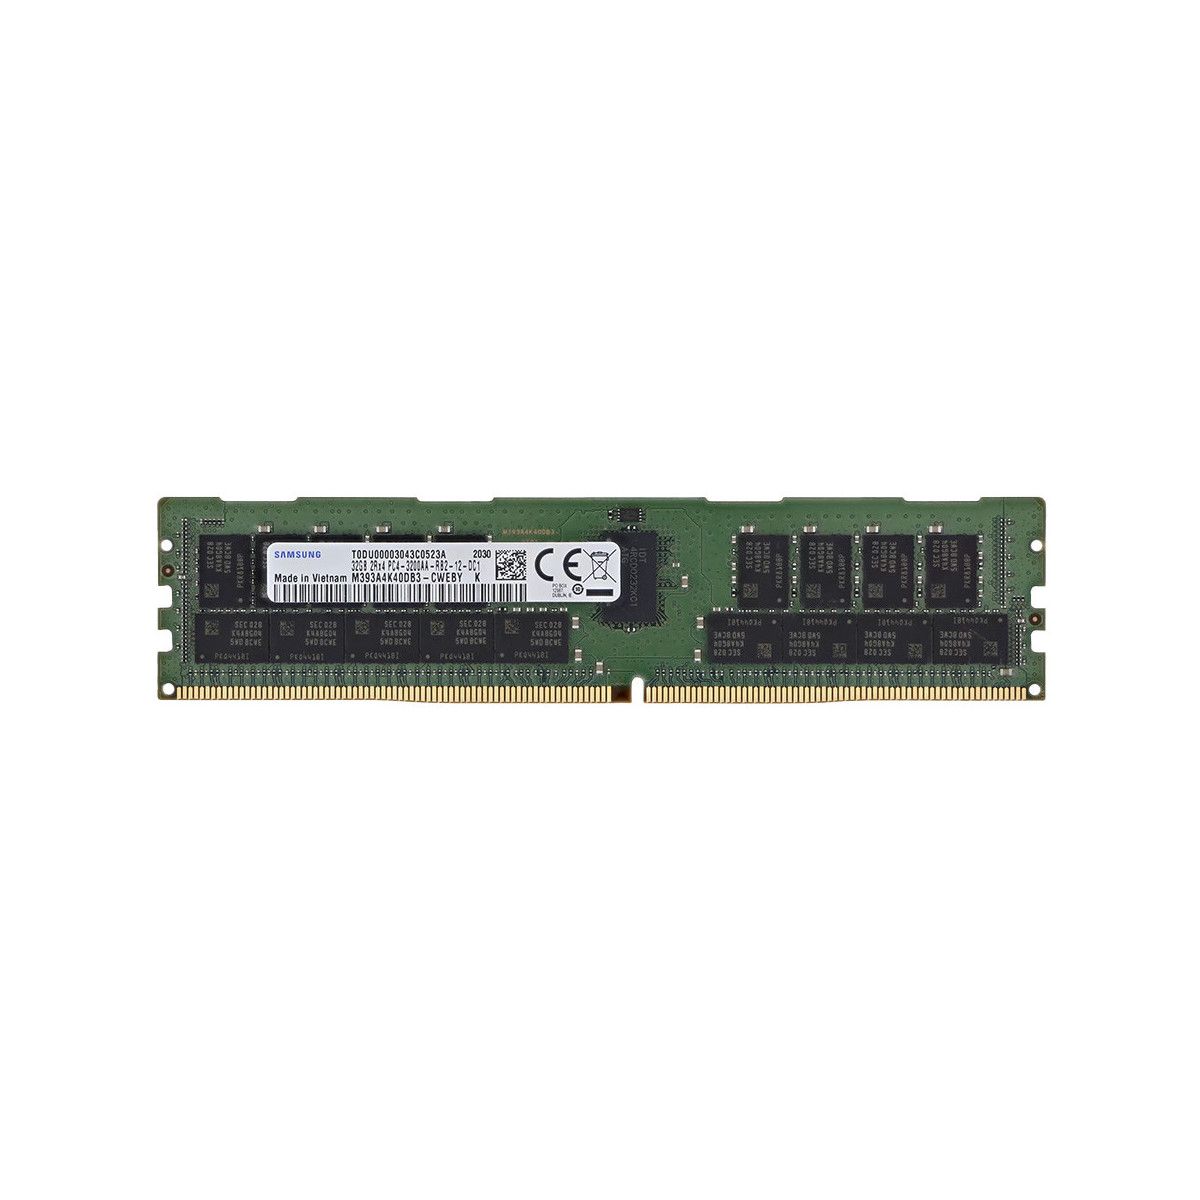 P06033‐K21-MS - Memstar 1x 32GB DDR4-3200 RDIMM PC4-25600R - Mem-star Memorie OEM compatibilă 1 - Memstar 